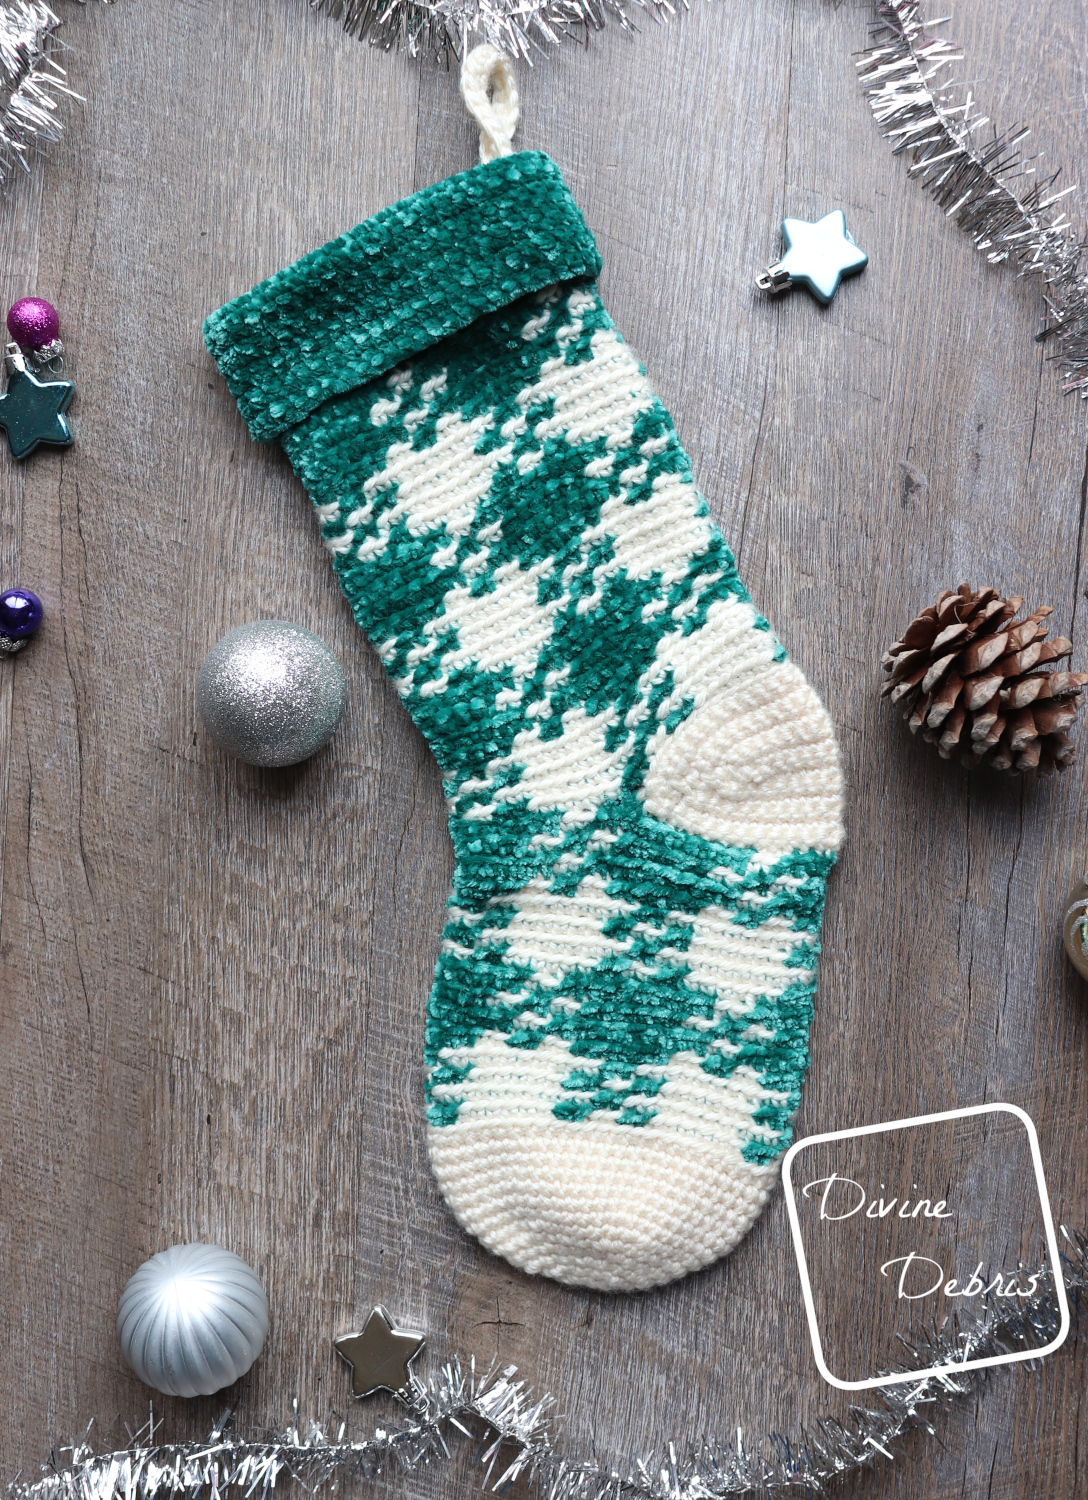 Get Pretty in Gingham In Stockings! A Free Crochet Pattern